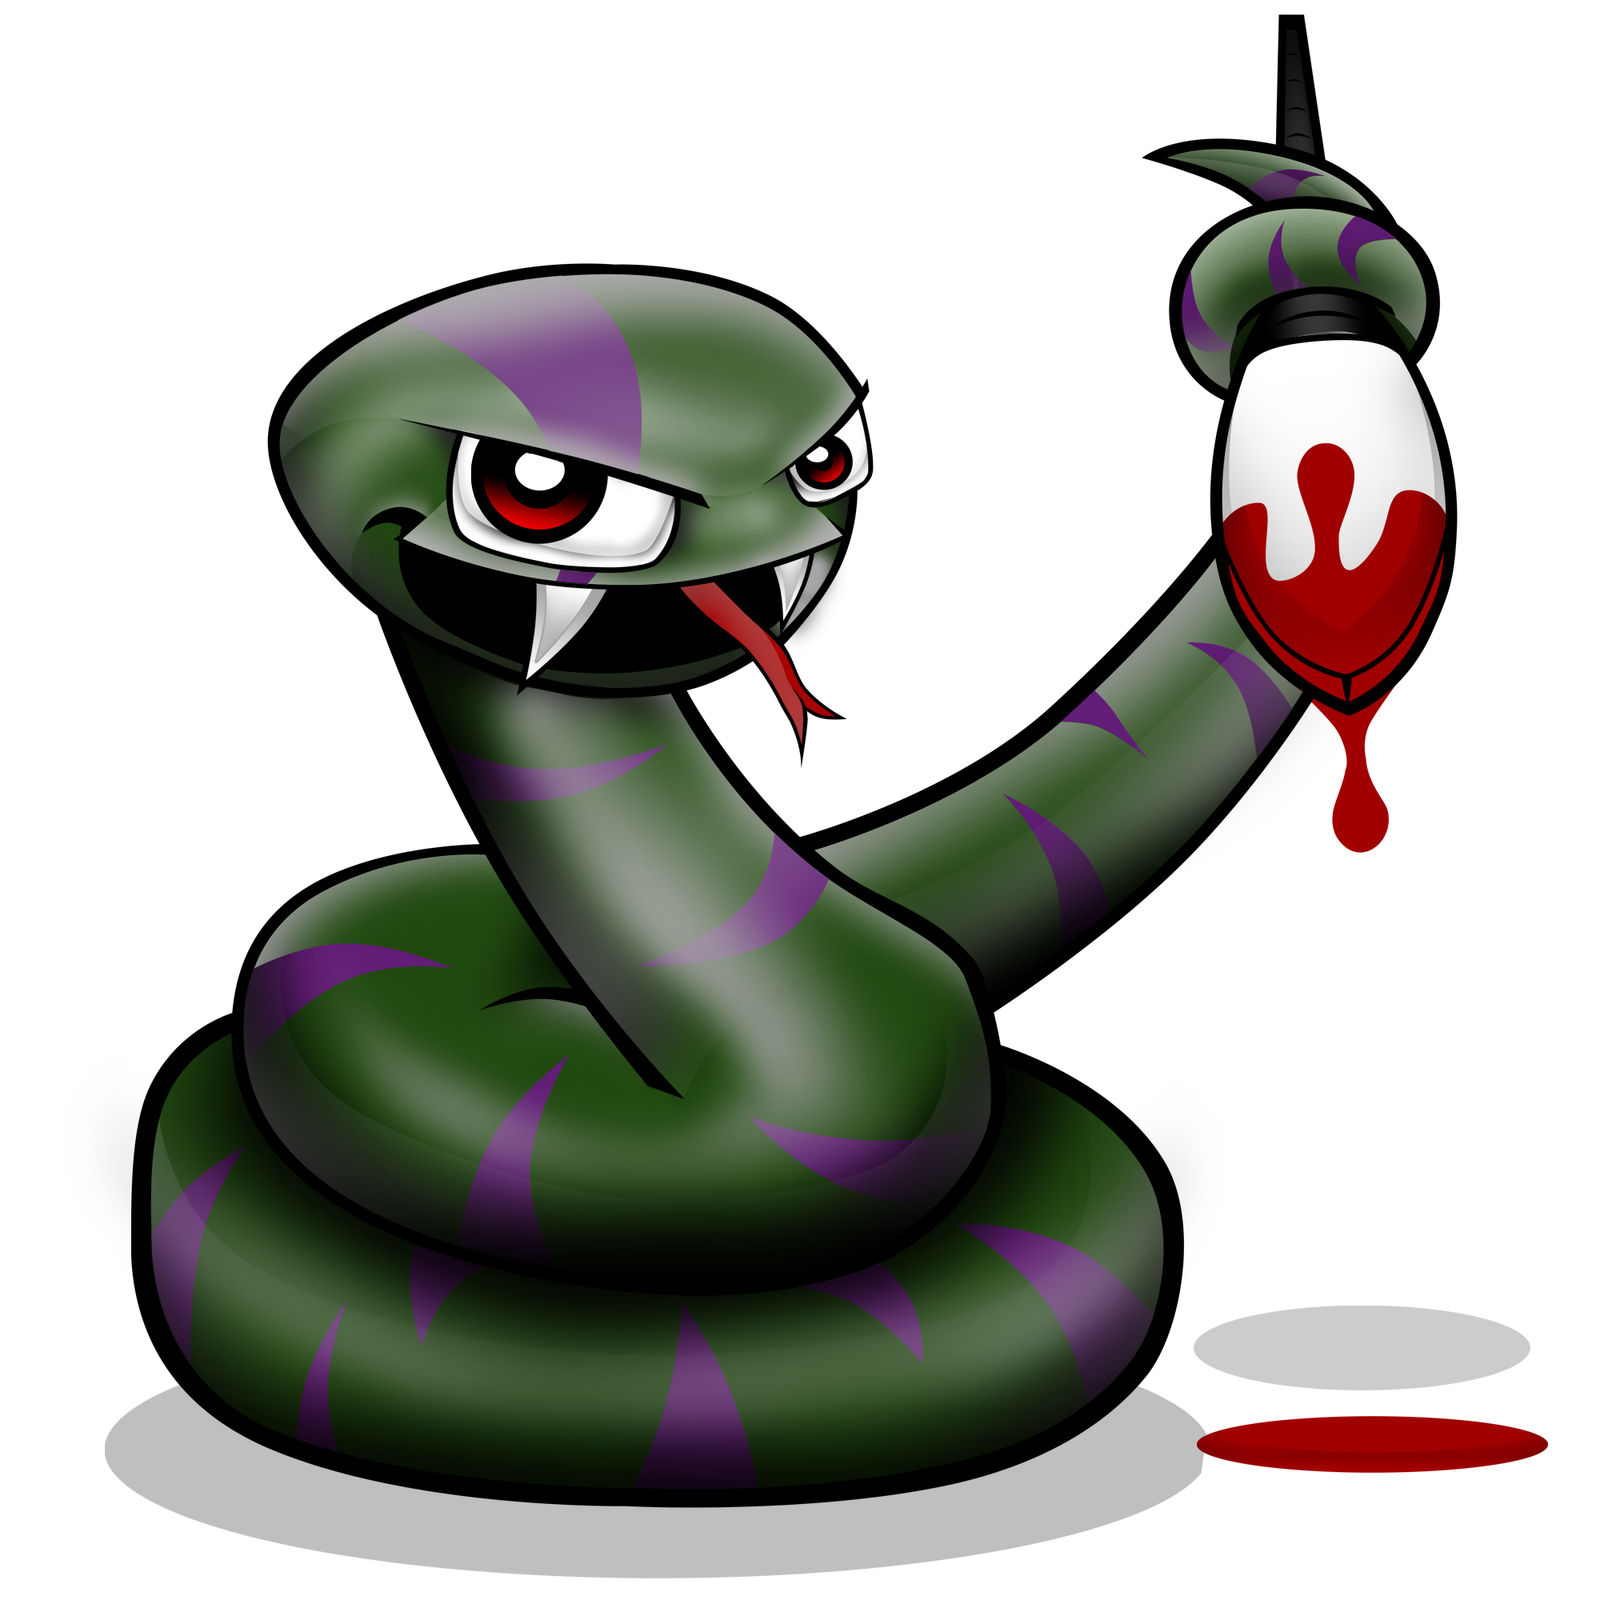 Evil snake by SAIDesigns on DeviantArt